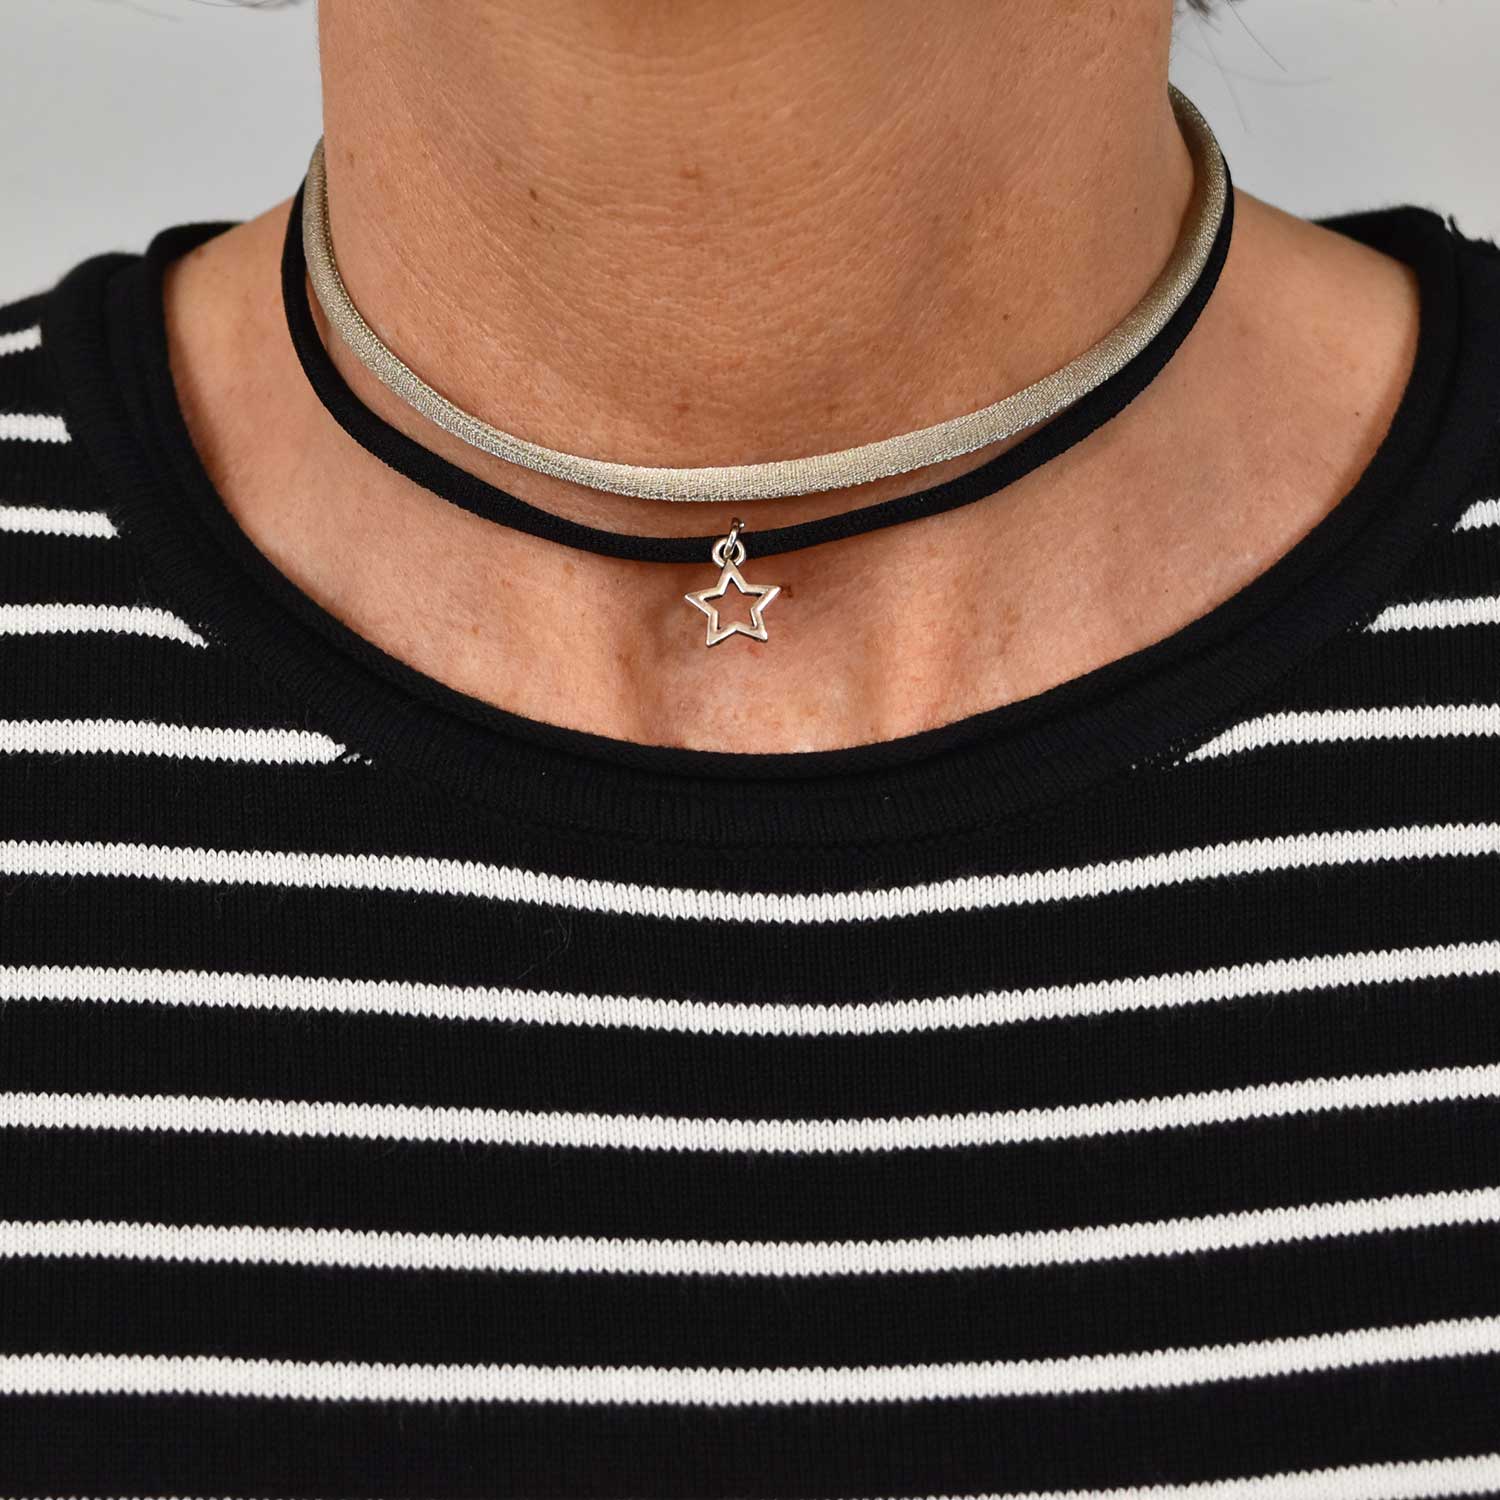 Black star elastic necklace